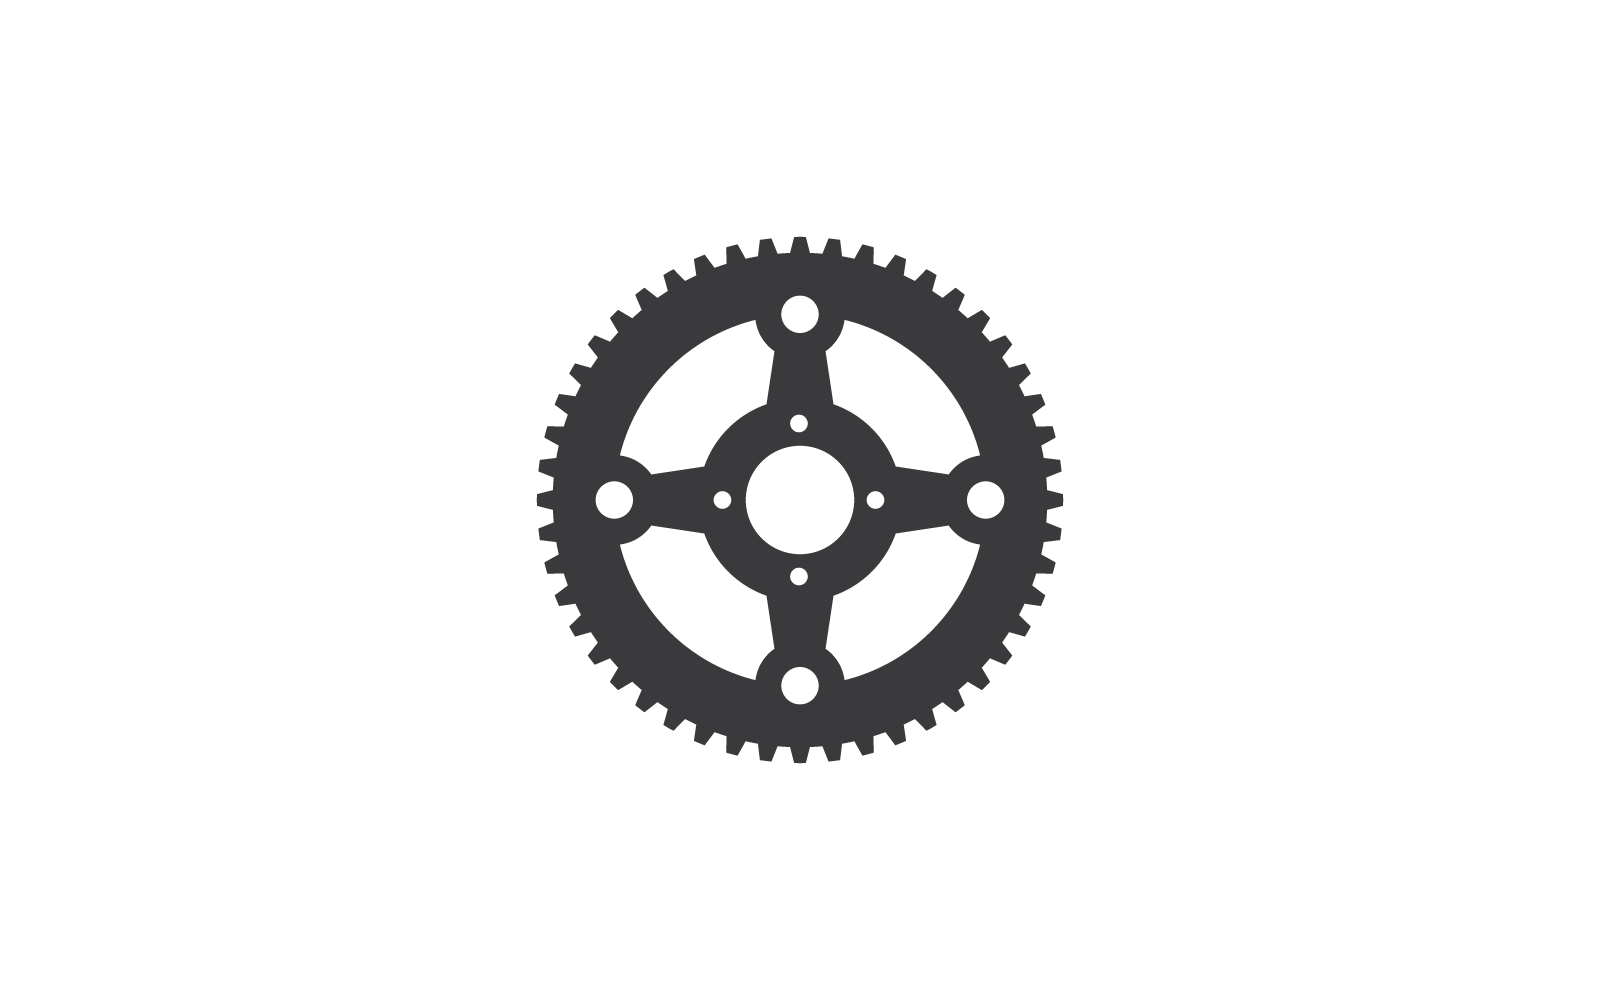 Bicycle cogwheel illustration vector design